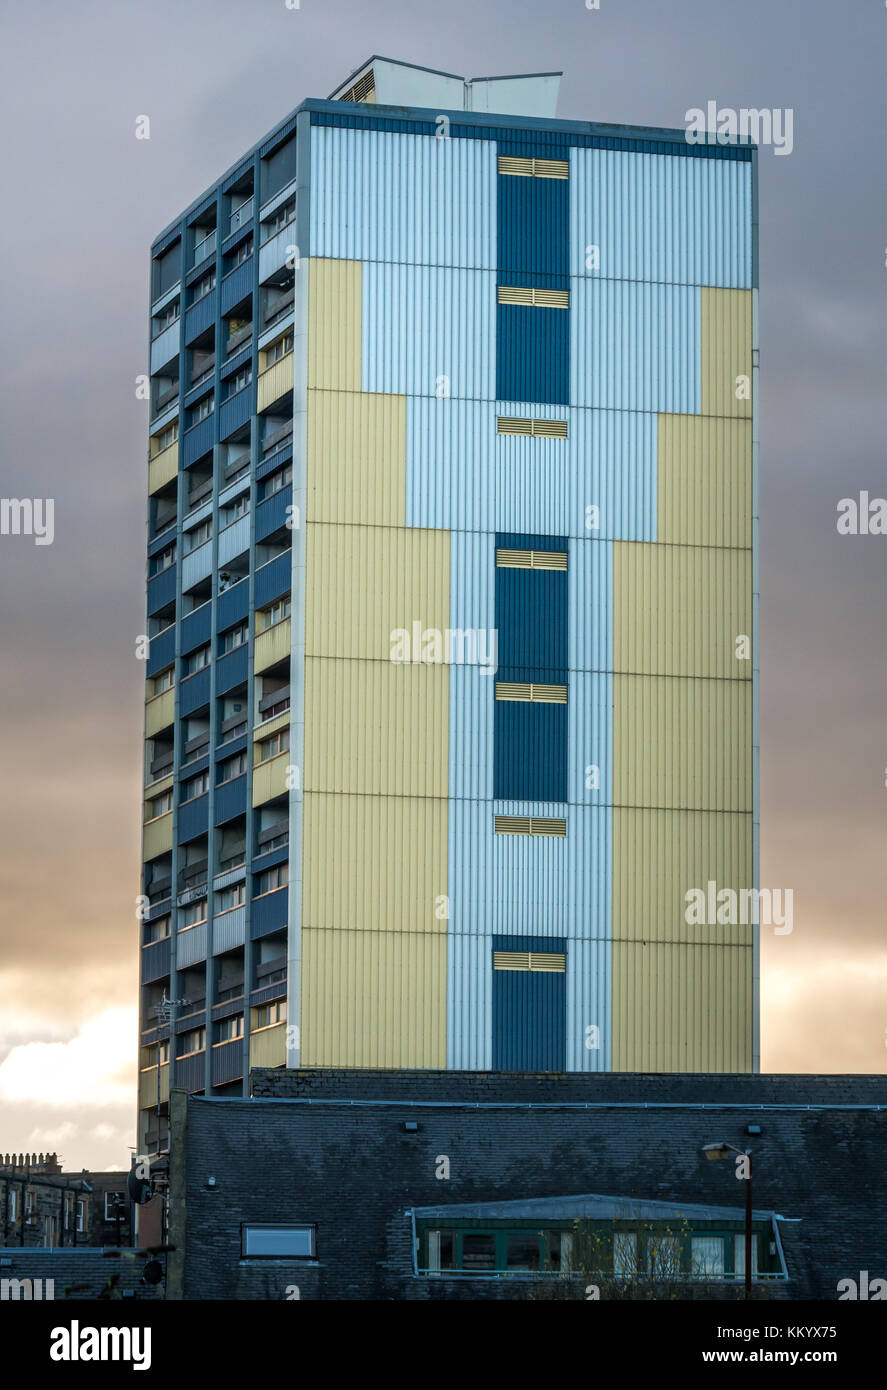 Consejo flats, bloques de torre de vivienda social, Couper Street, contra el oscuro cielo nublado, Leith, Edimburgo, Escocia, Reino Unido Foto de stock